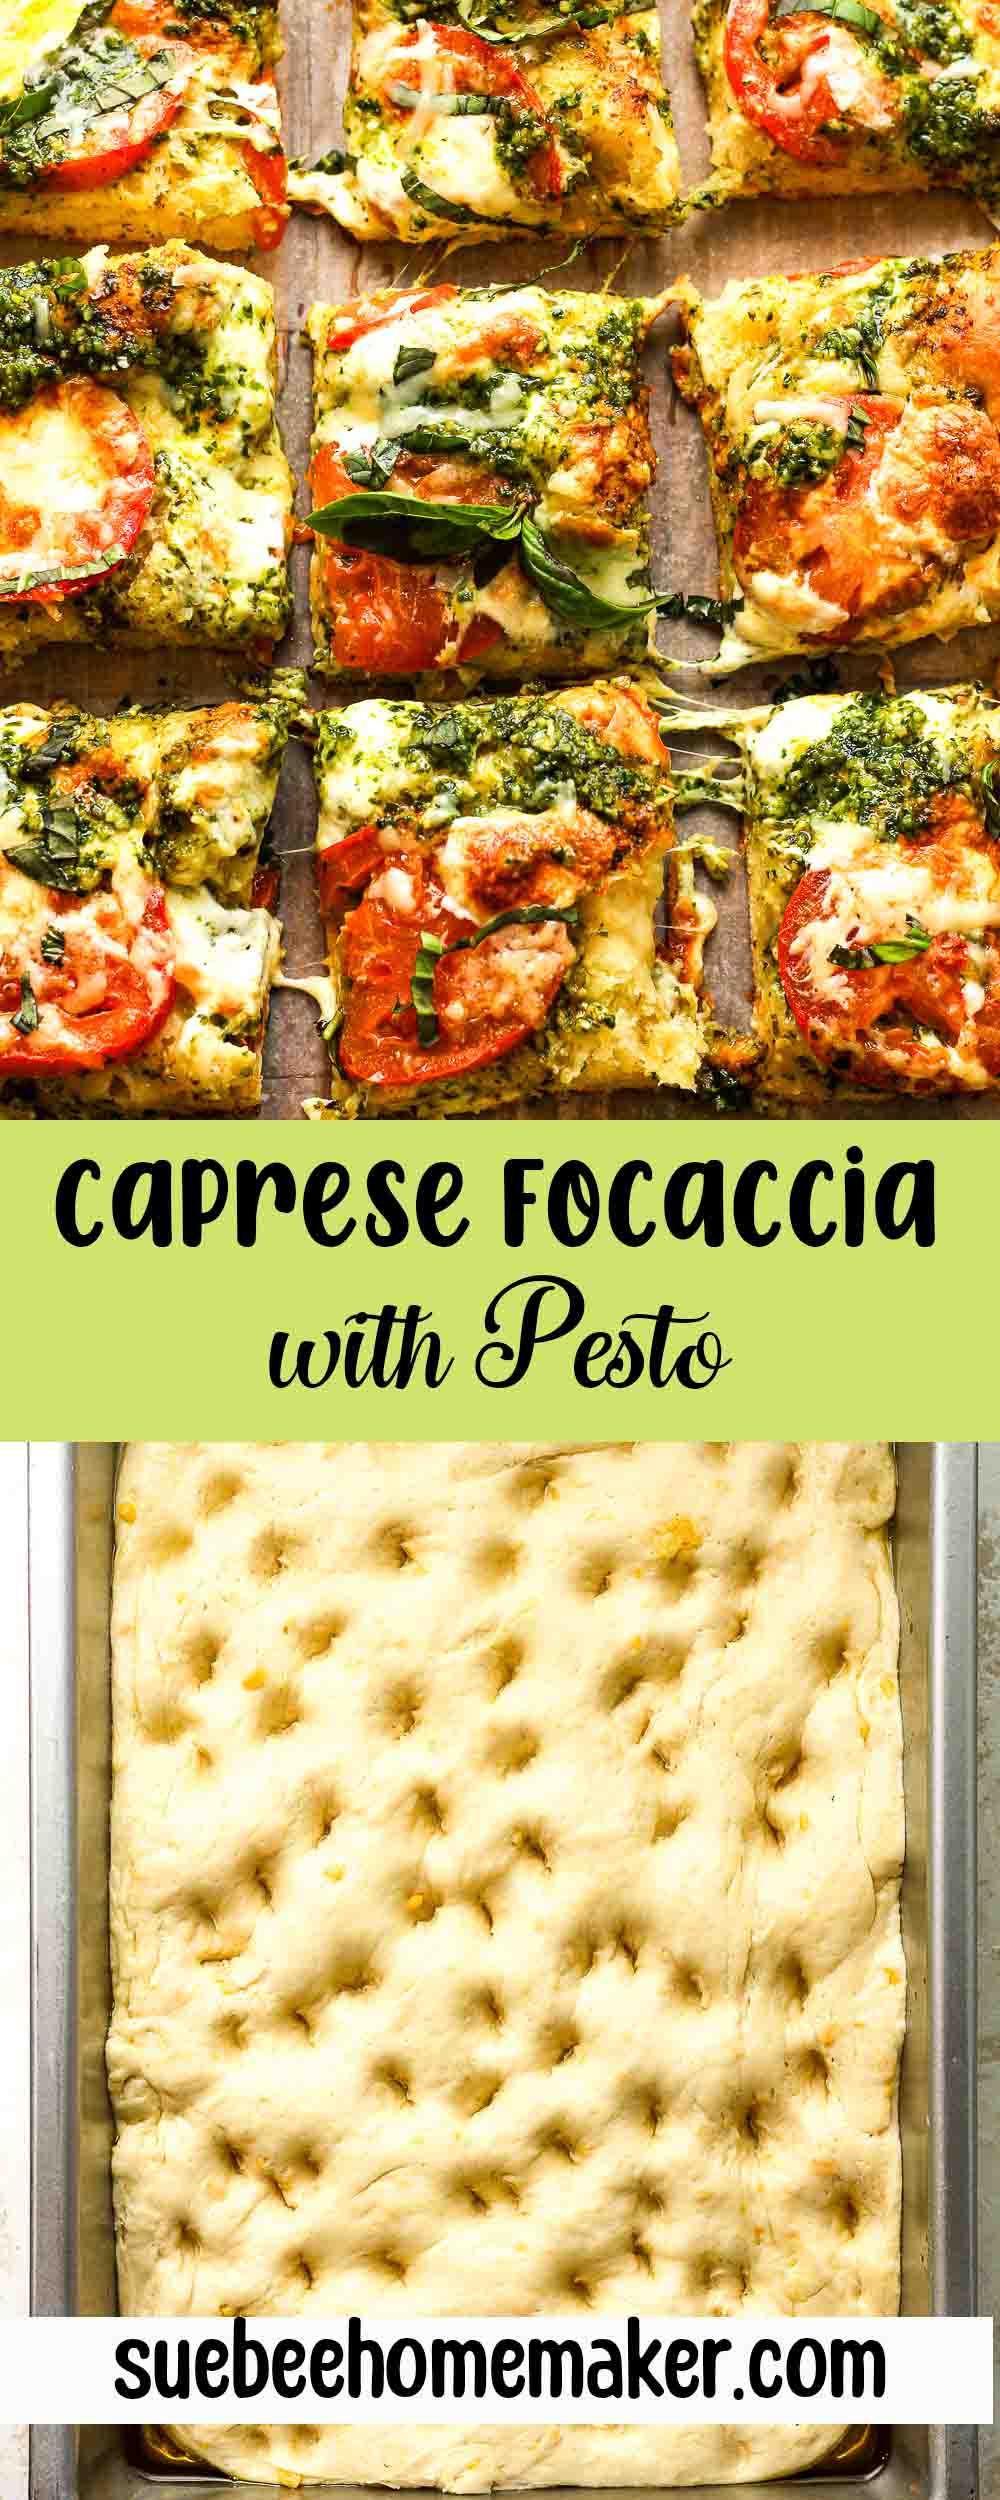 A collage of caprese focaccia with pesto.